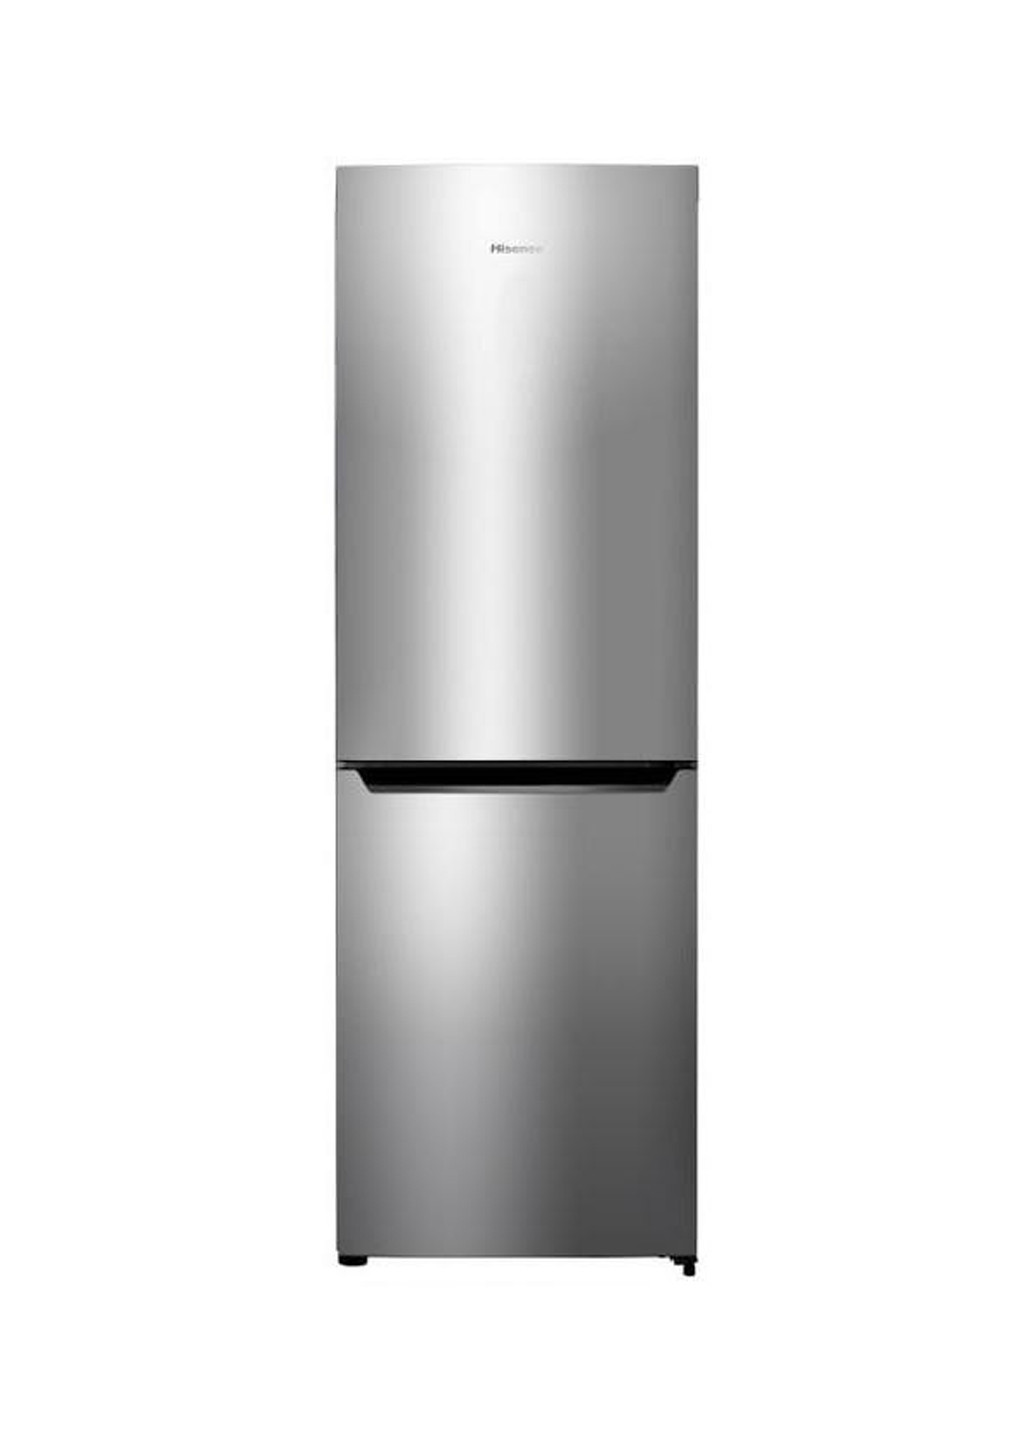 Холодильник RD-37WC4SHA / CVA1-001 Hisense rd-37wc4sha/cva1-001 (142685239)